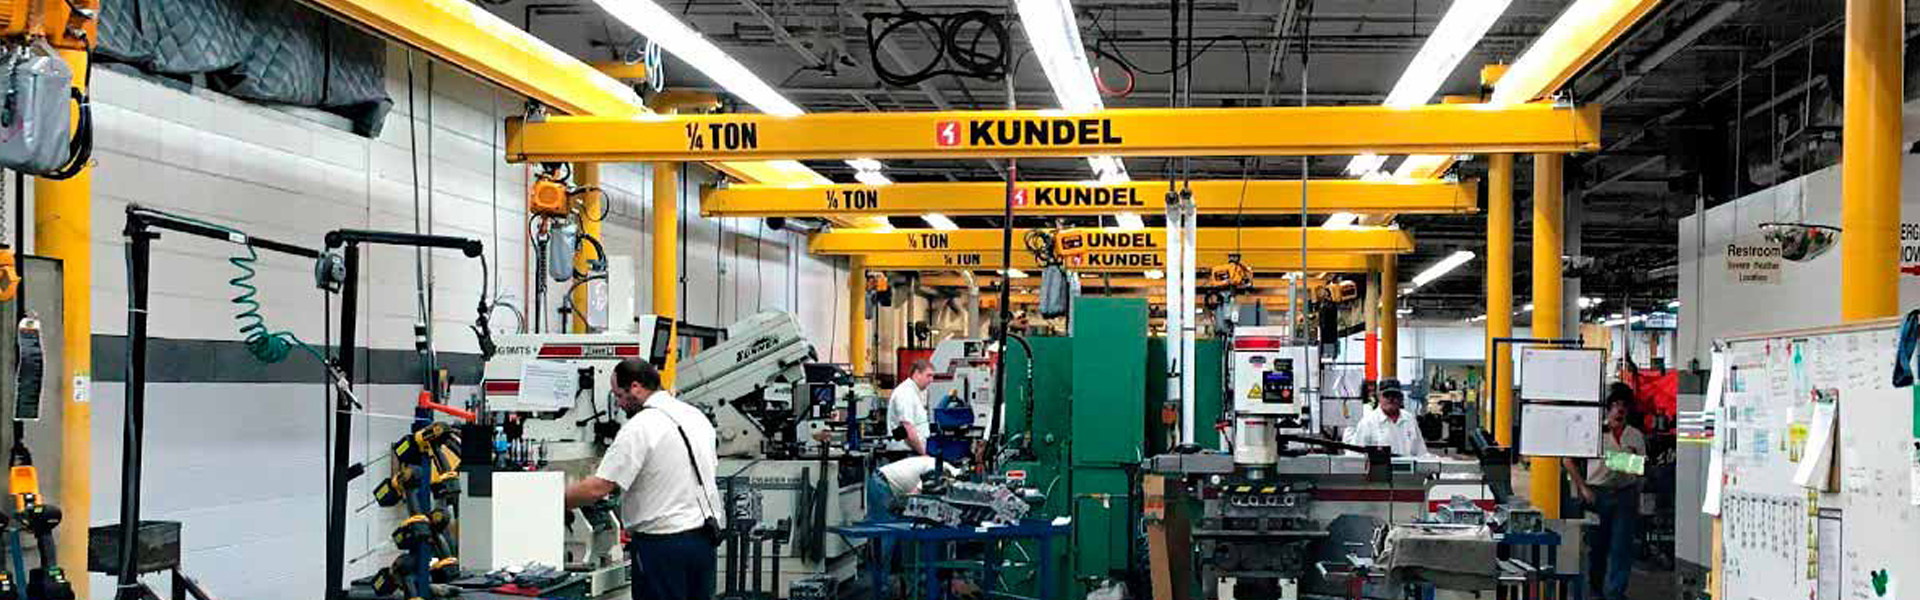 Kundel Equipment